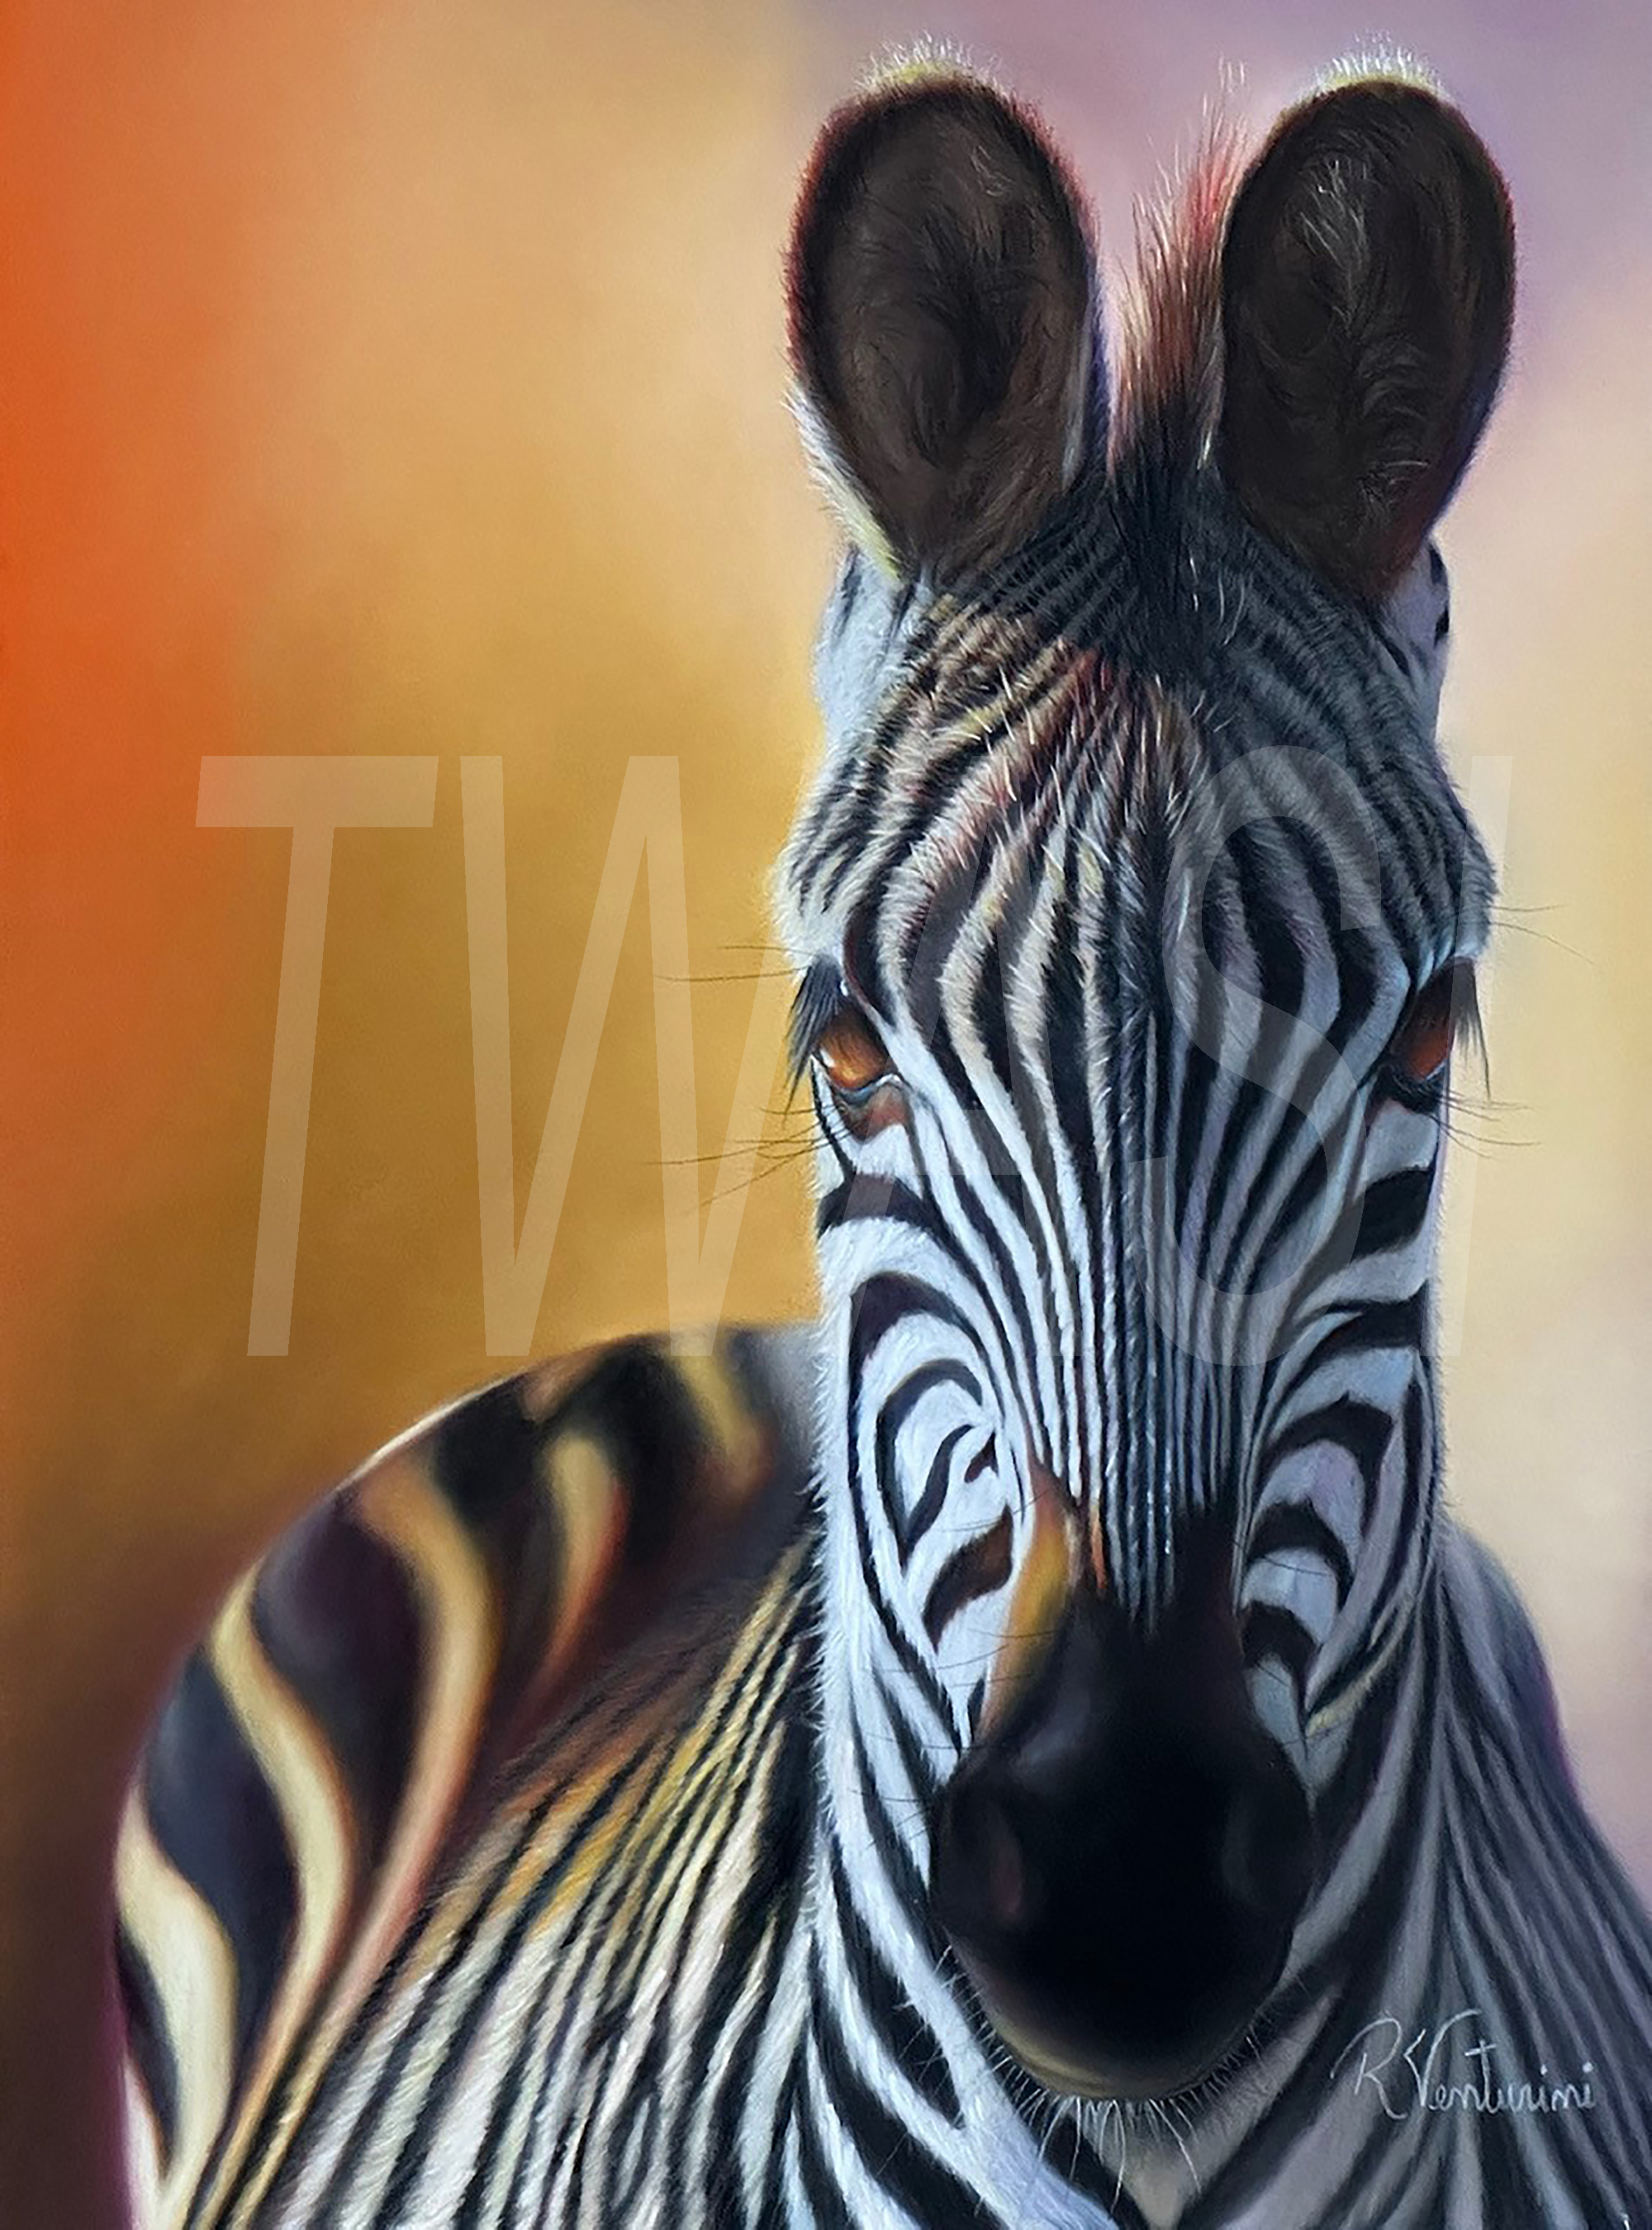 Zebra by Rosana Venturini rosana_venturini@yahoo.com